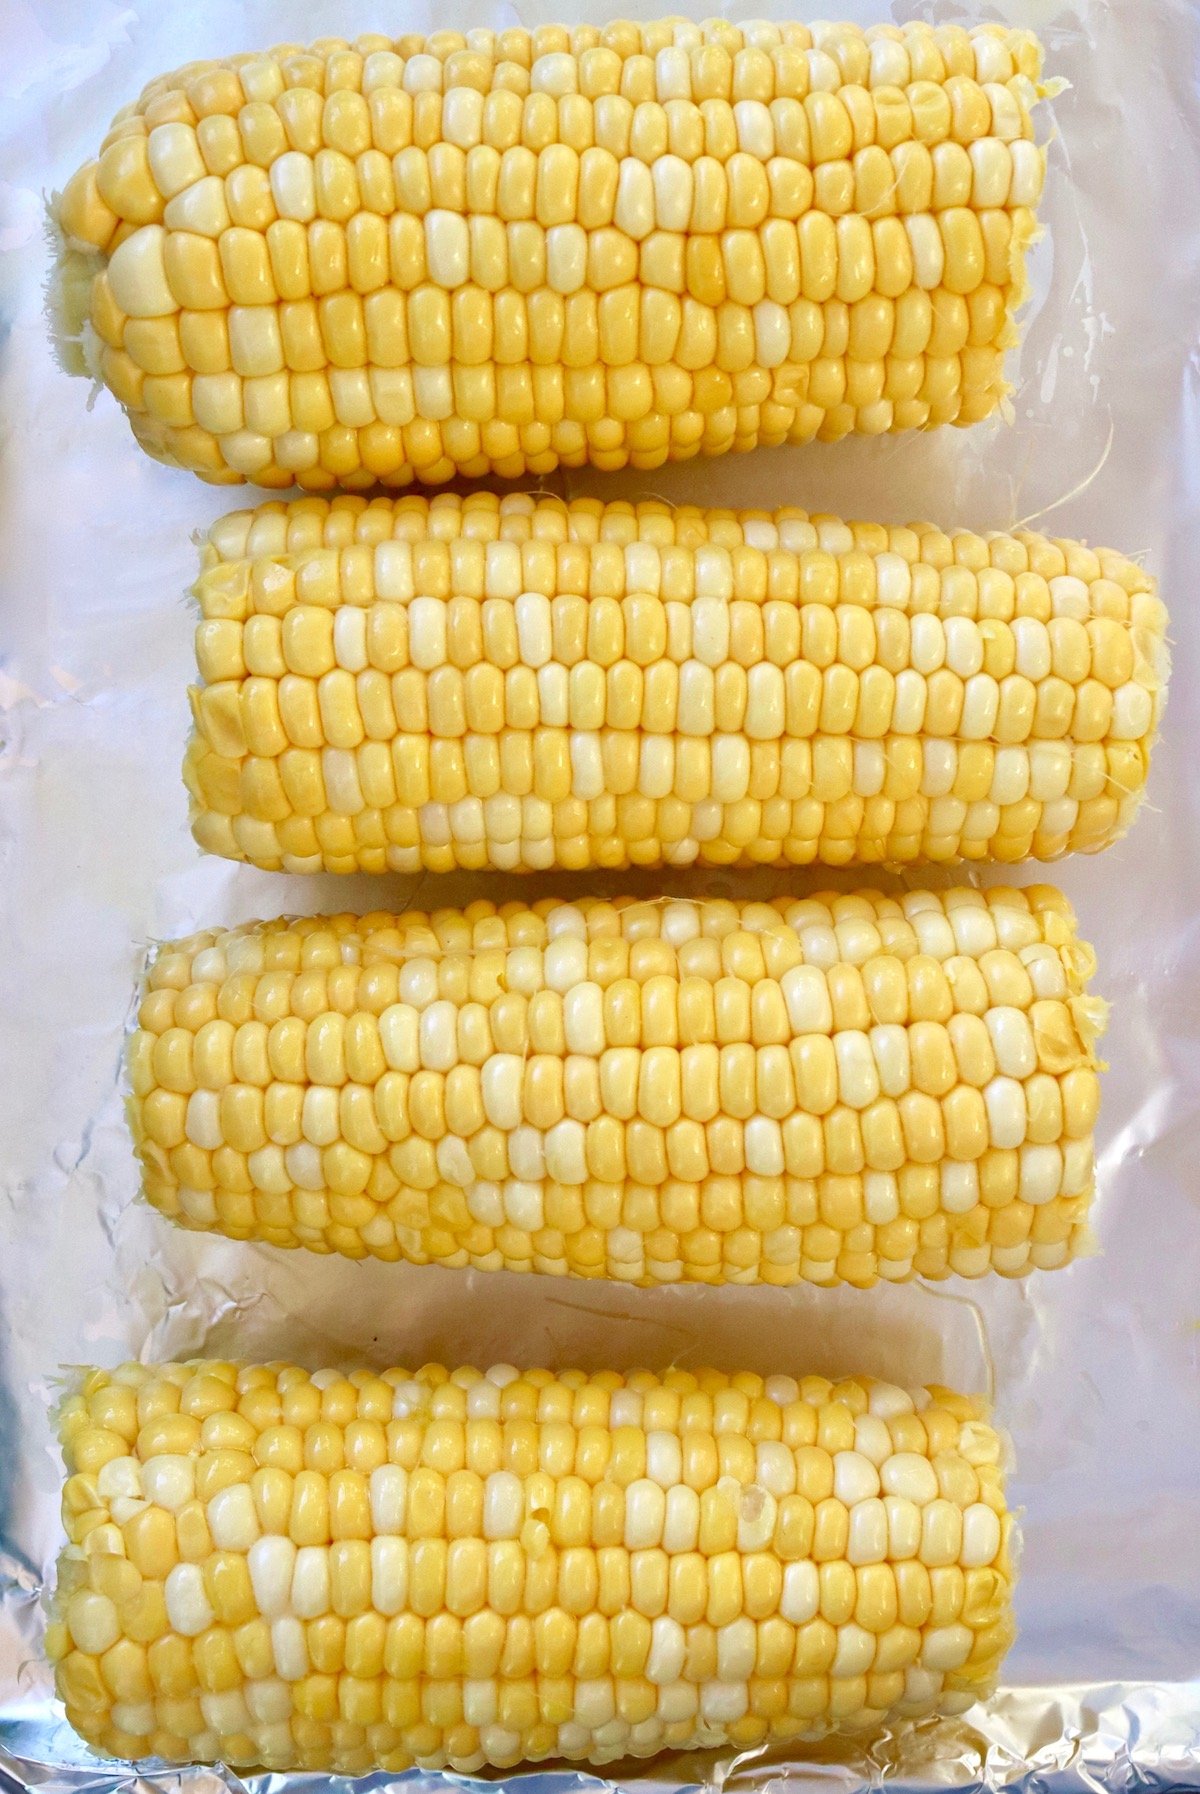 Four ears of raw corn on foil-lined baking sheet.